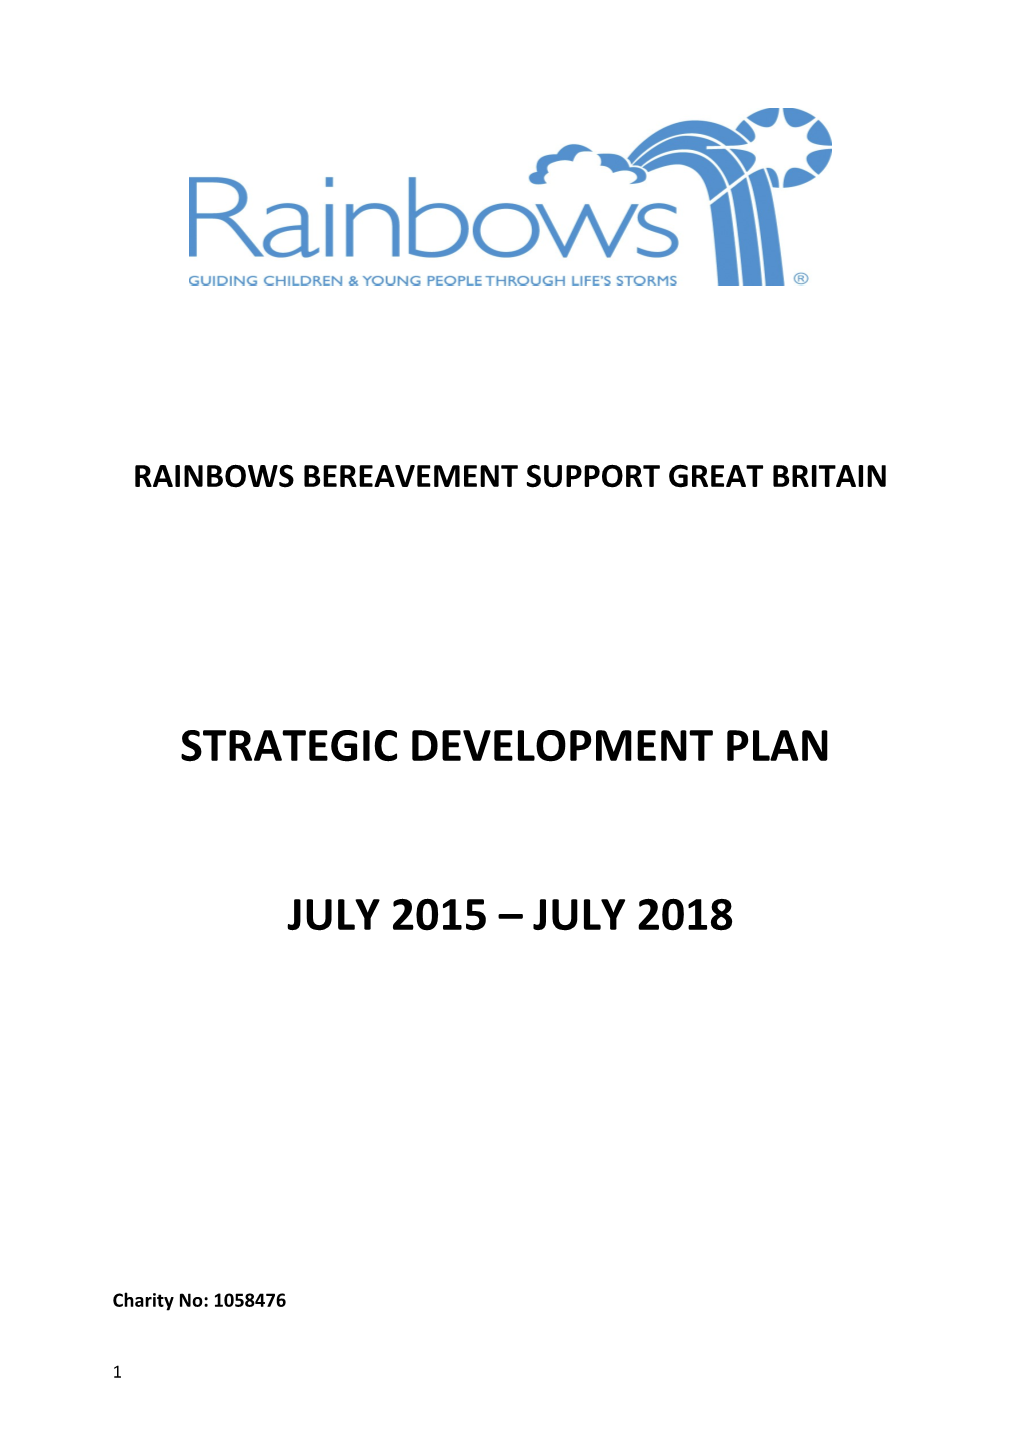 Rainbows Bereavement Support Great Britain